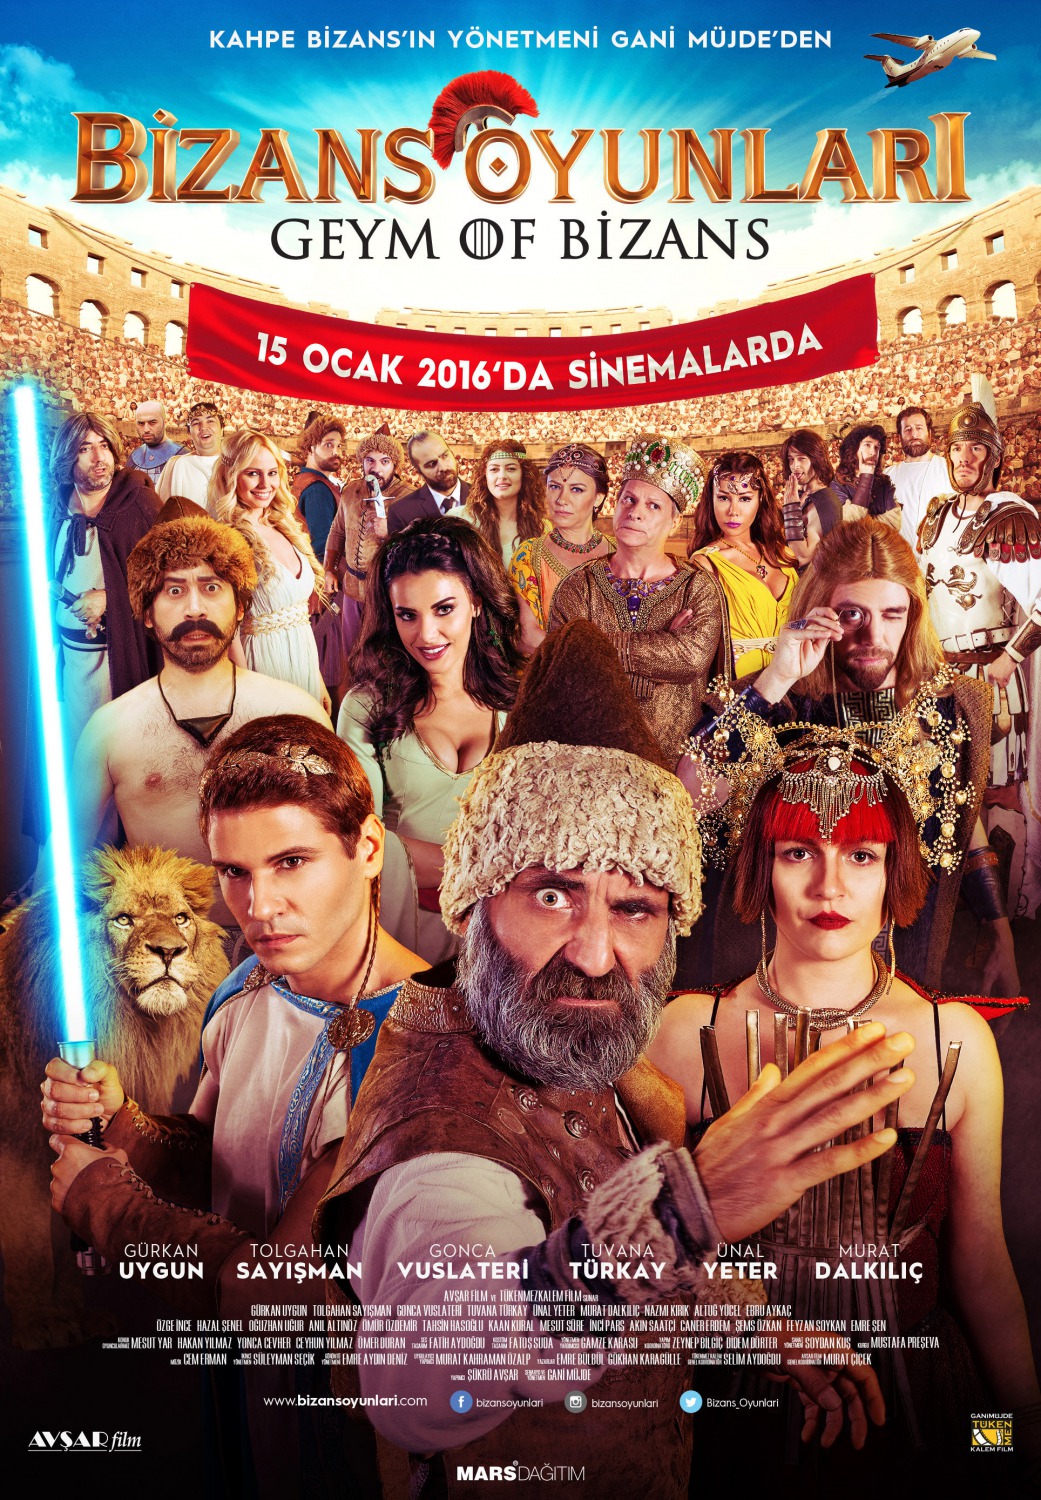 Extra Large Movie Poster Image for Bizans Oyunlari (#1 of 7)